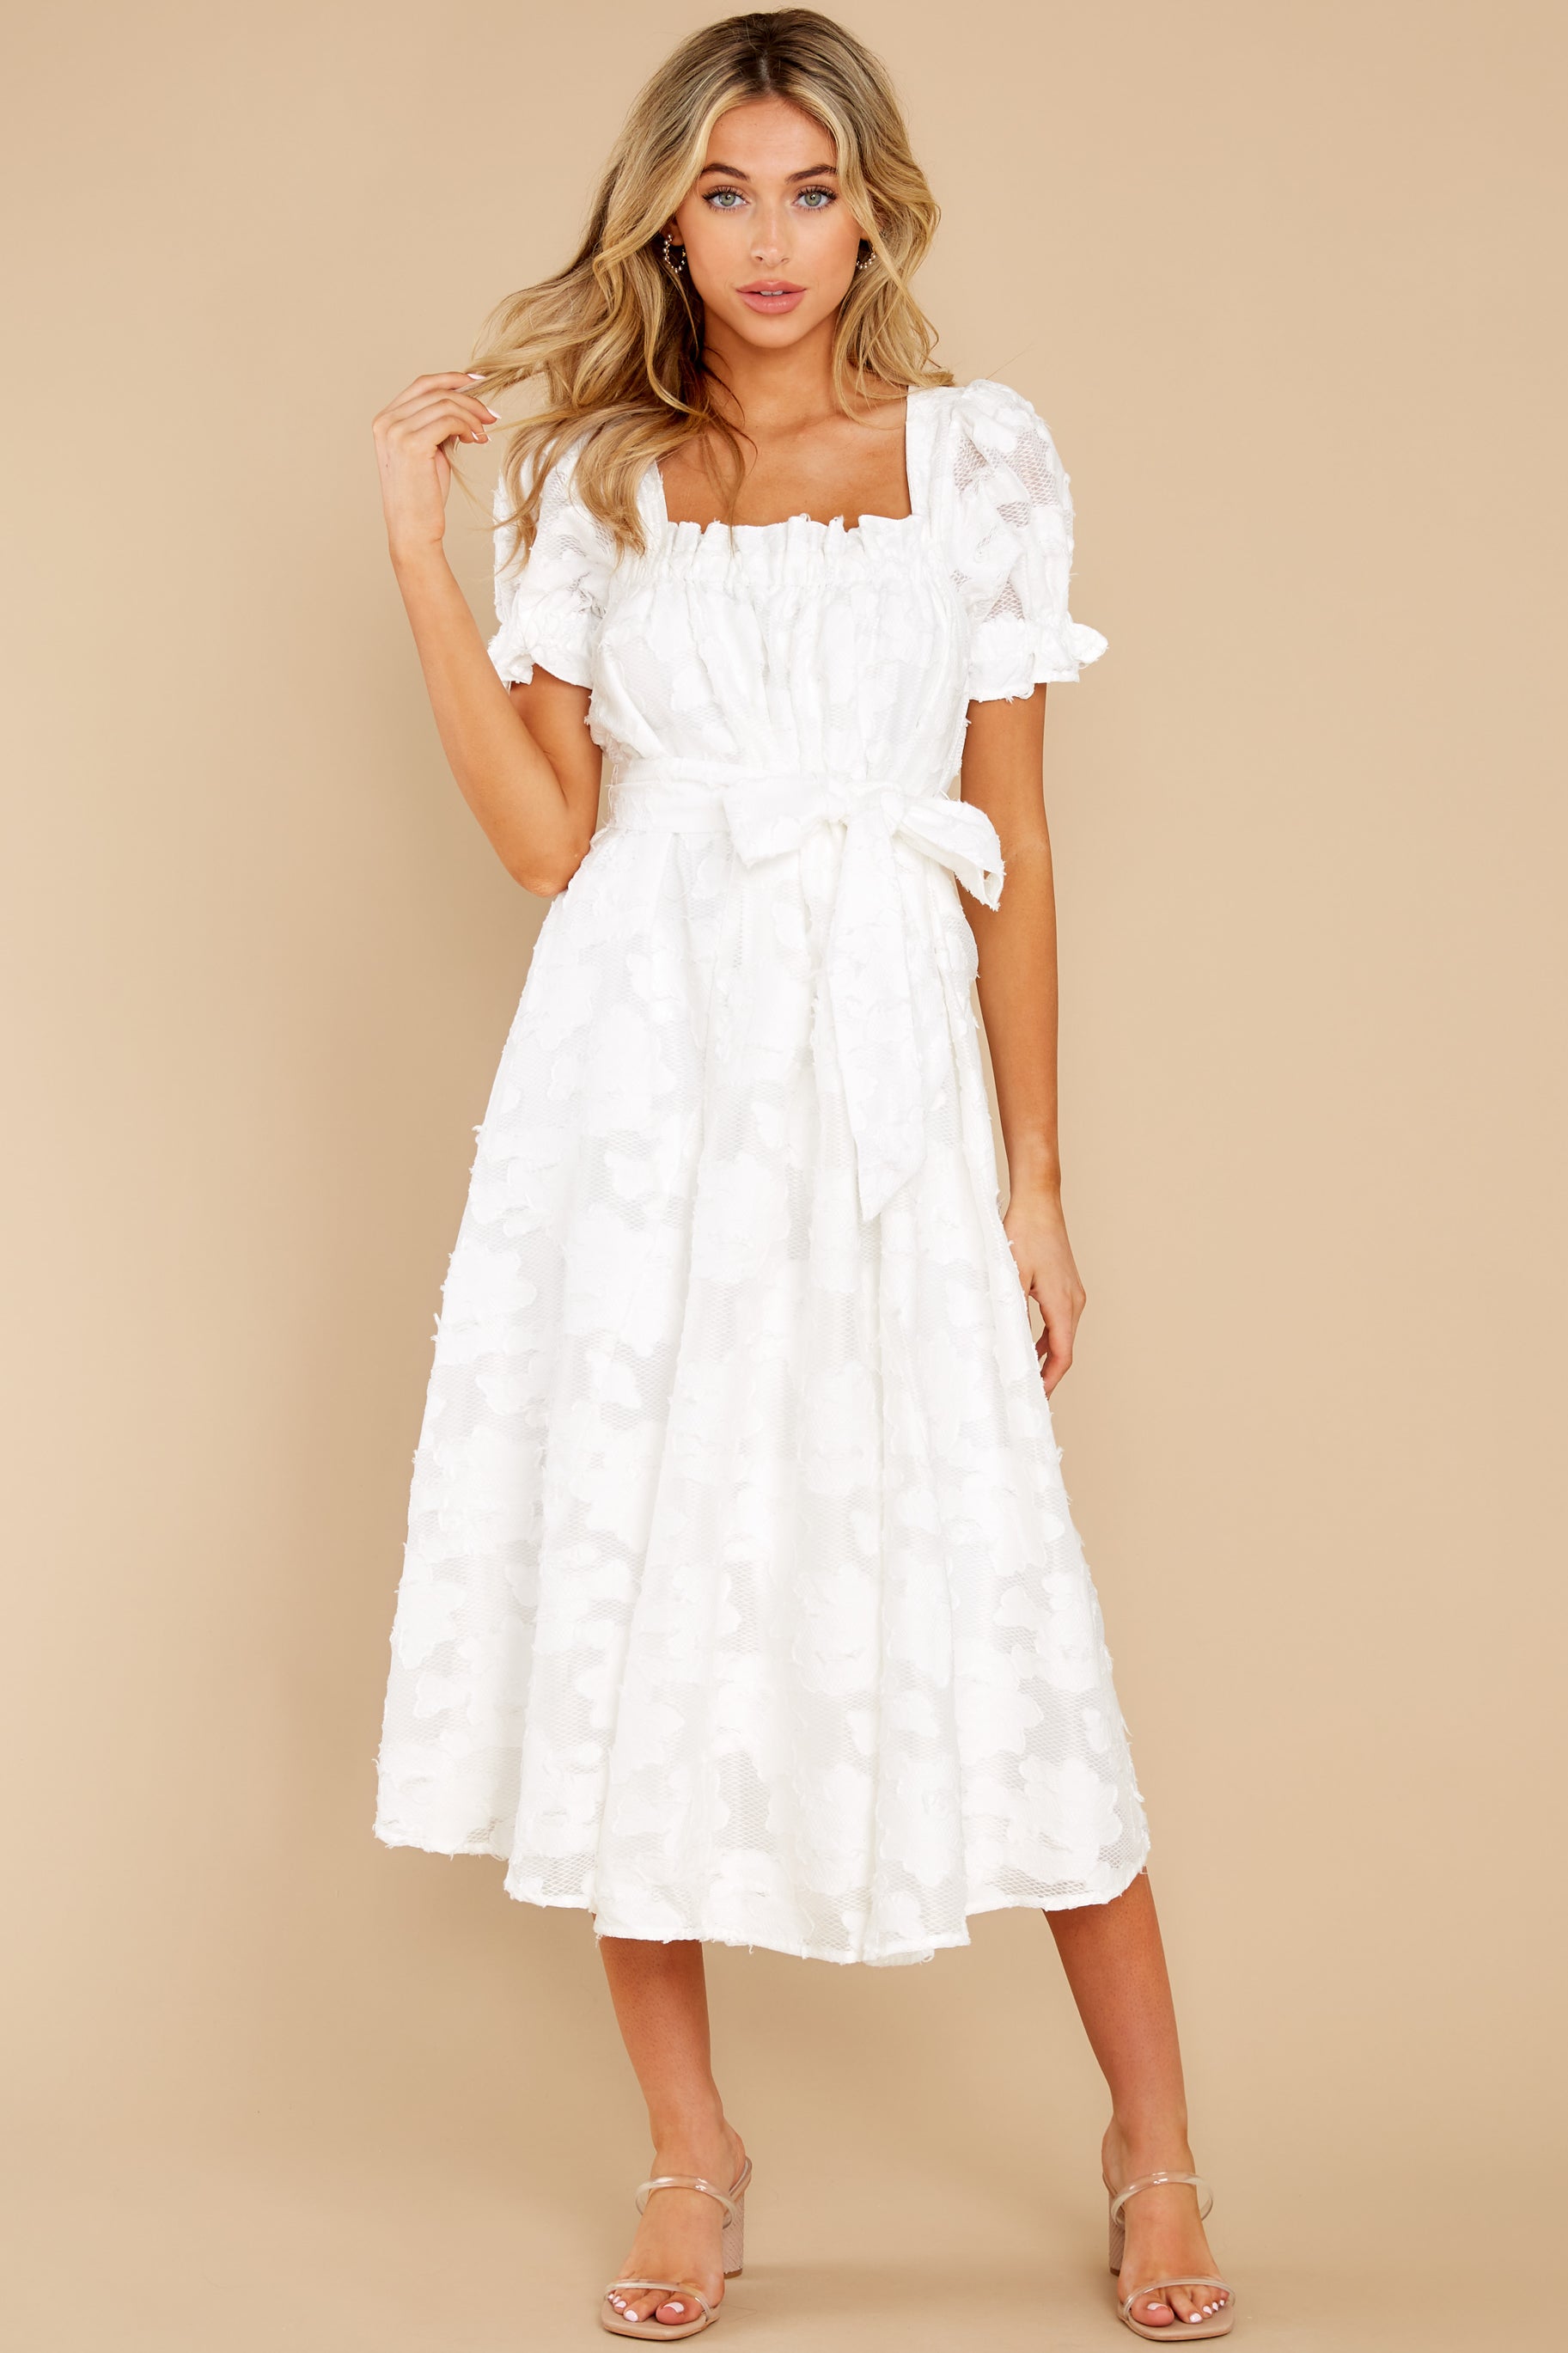 where can i find a white dress near me